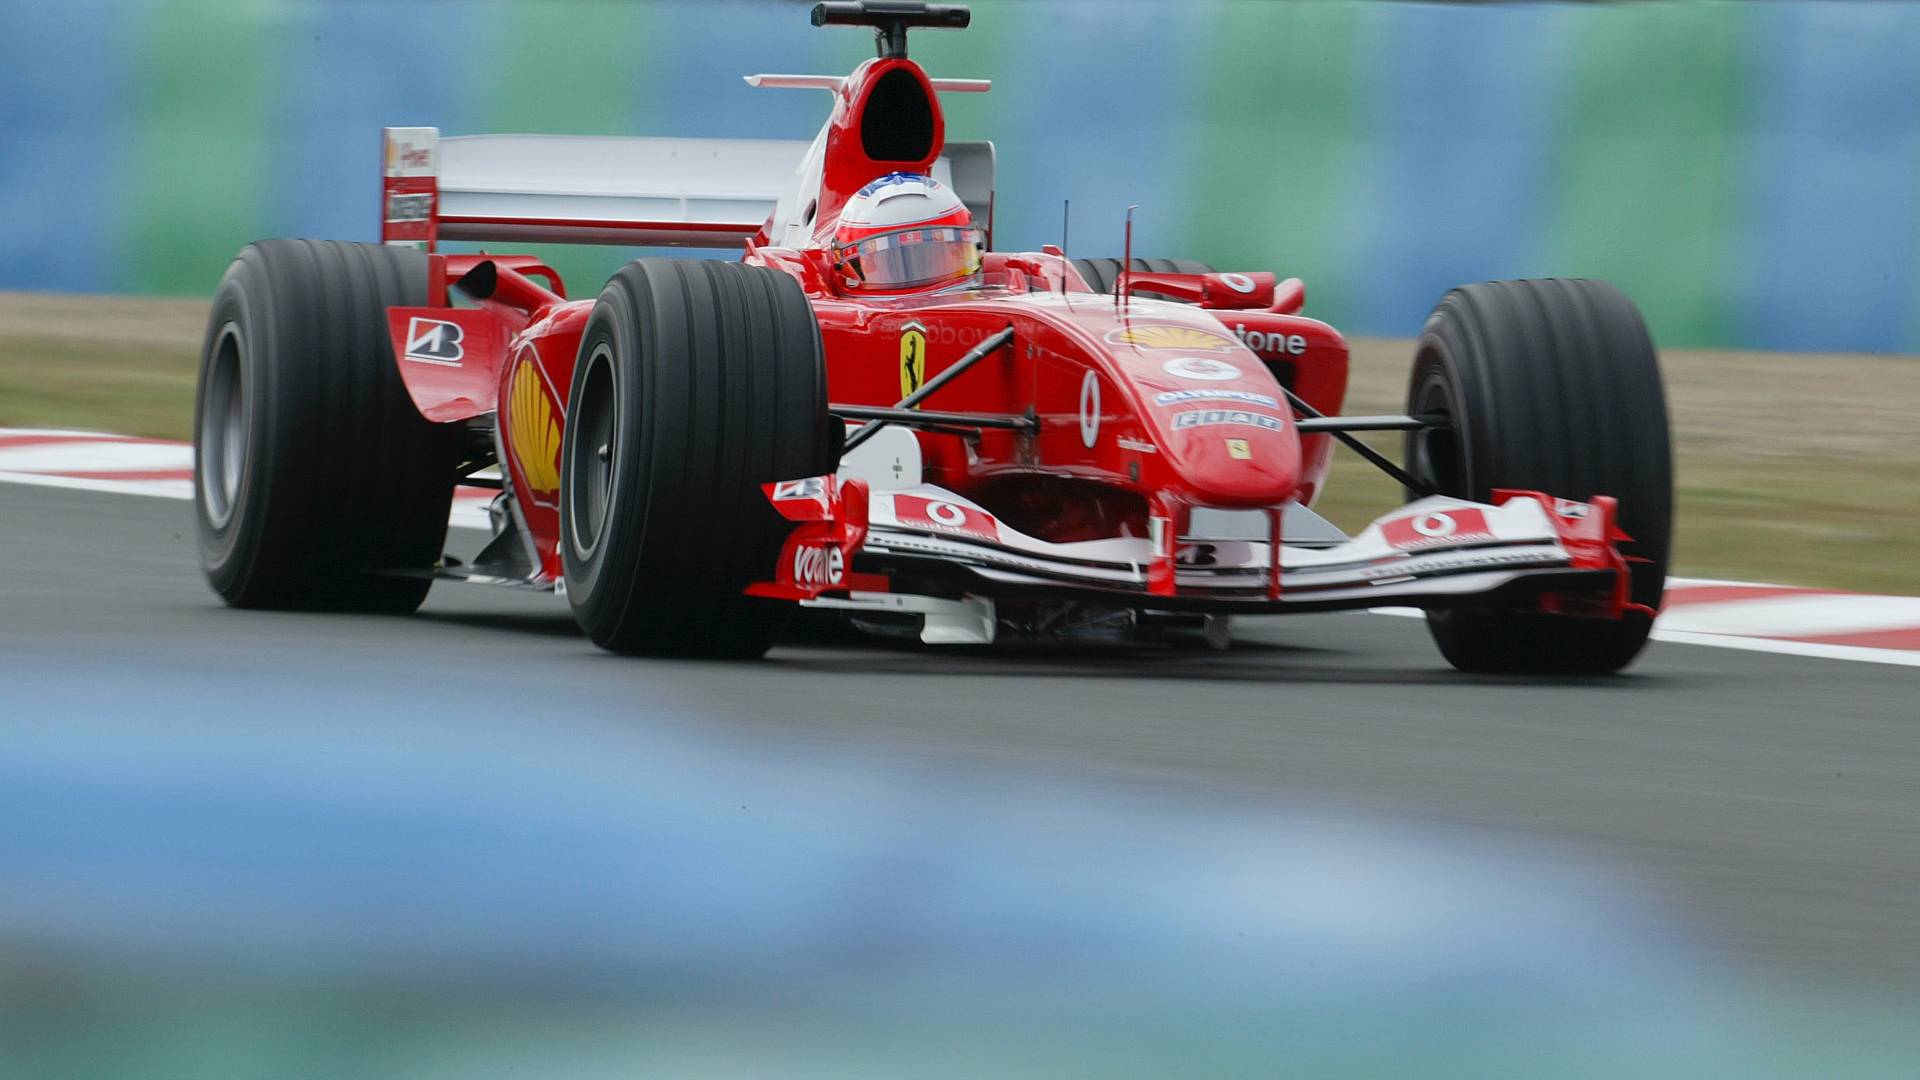 Schumacher's Ferrari F2004 coming to Autosport International